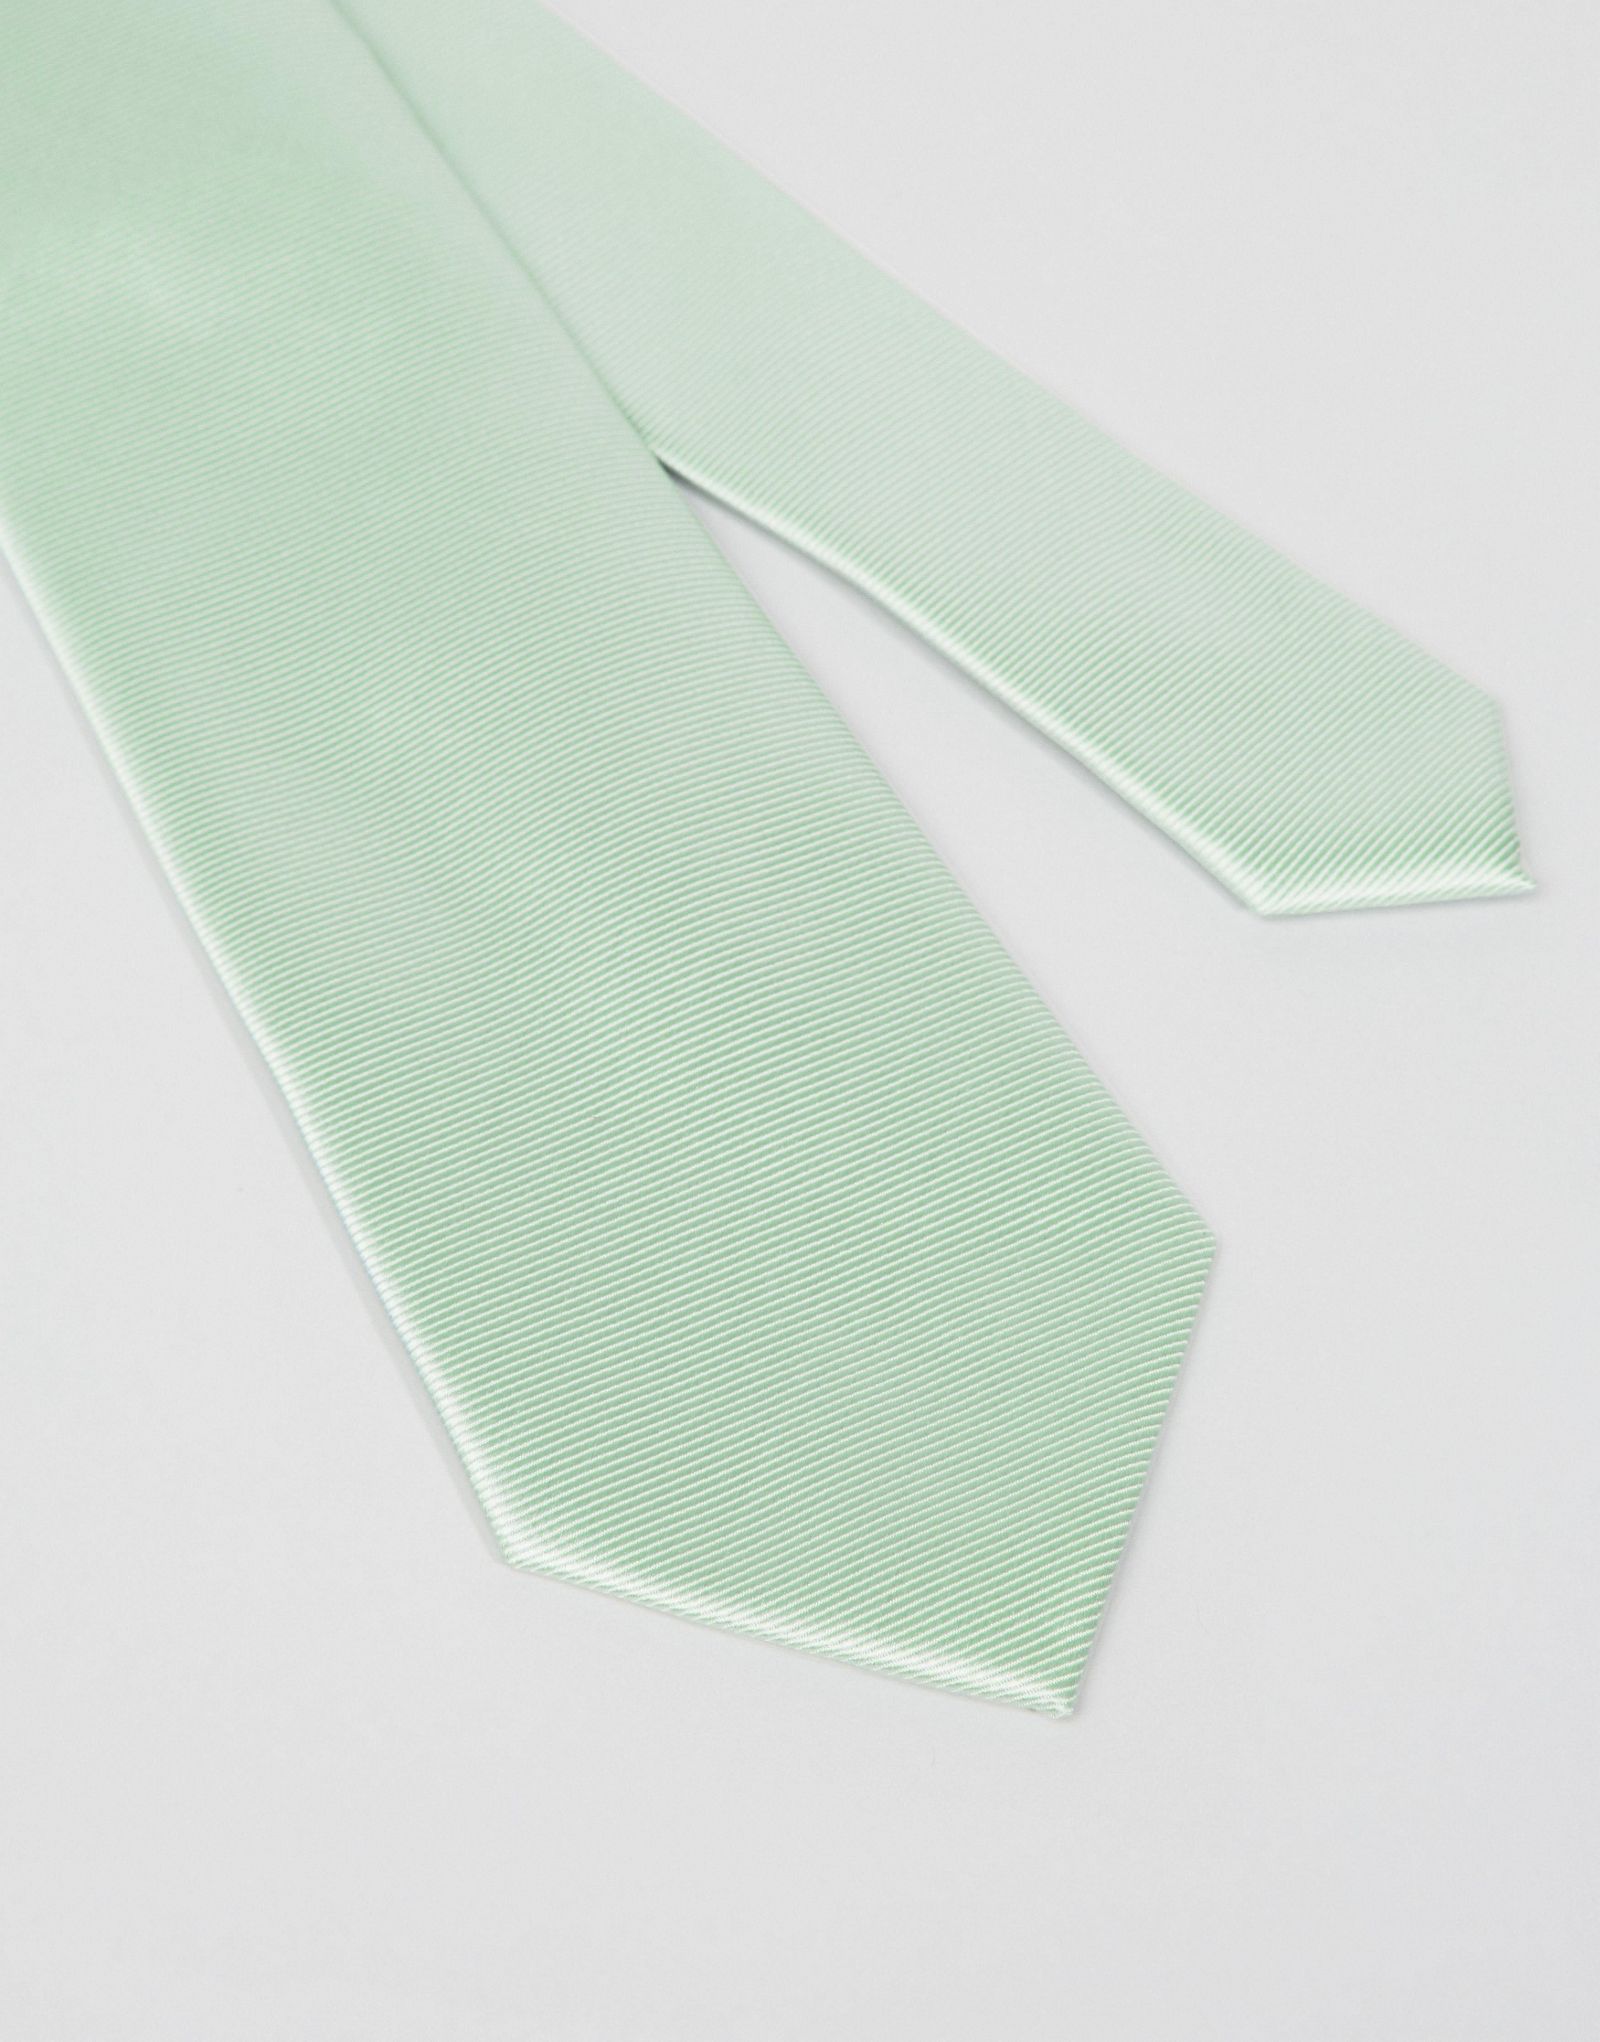 ASOS WEDDING Tie In Pale Green